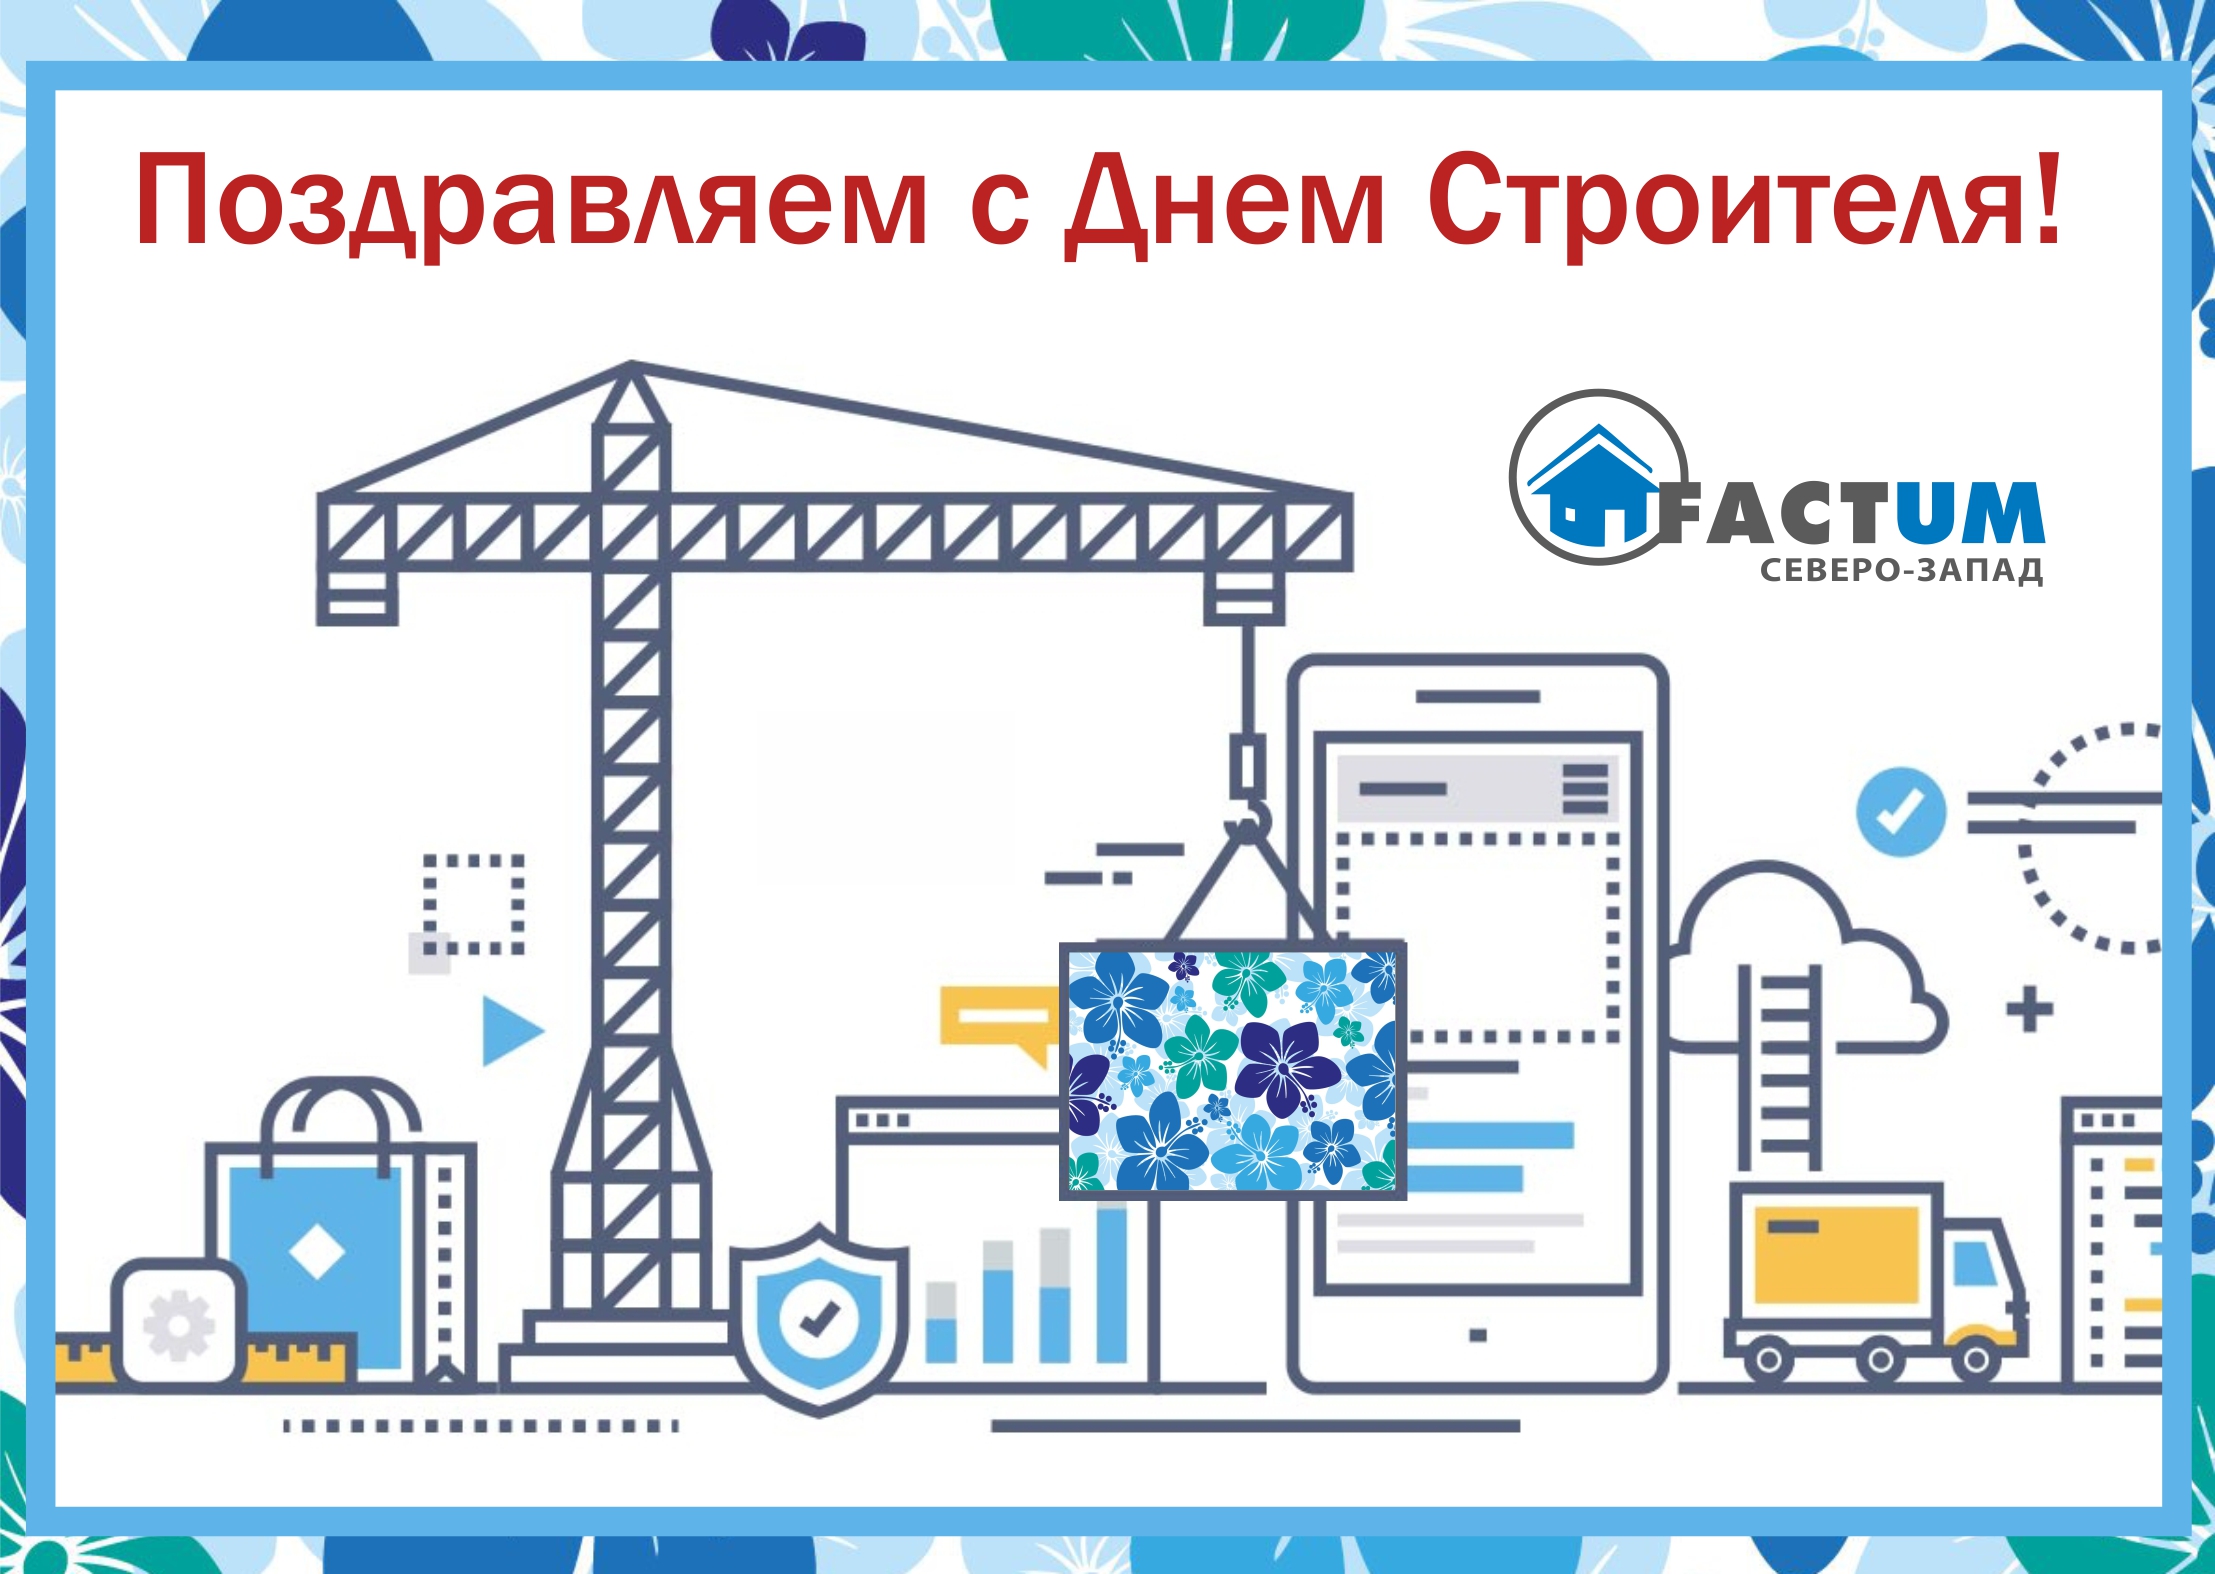 2 Компания «Фактум Северо-Запад», Санкт-Петербург | Теплекс (Teplex)